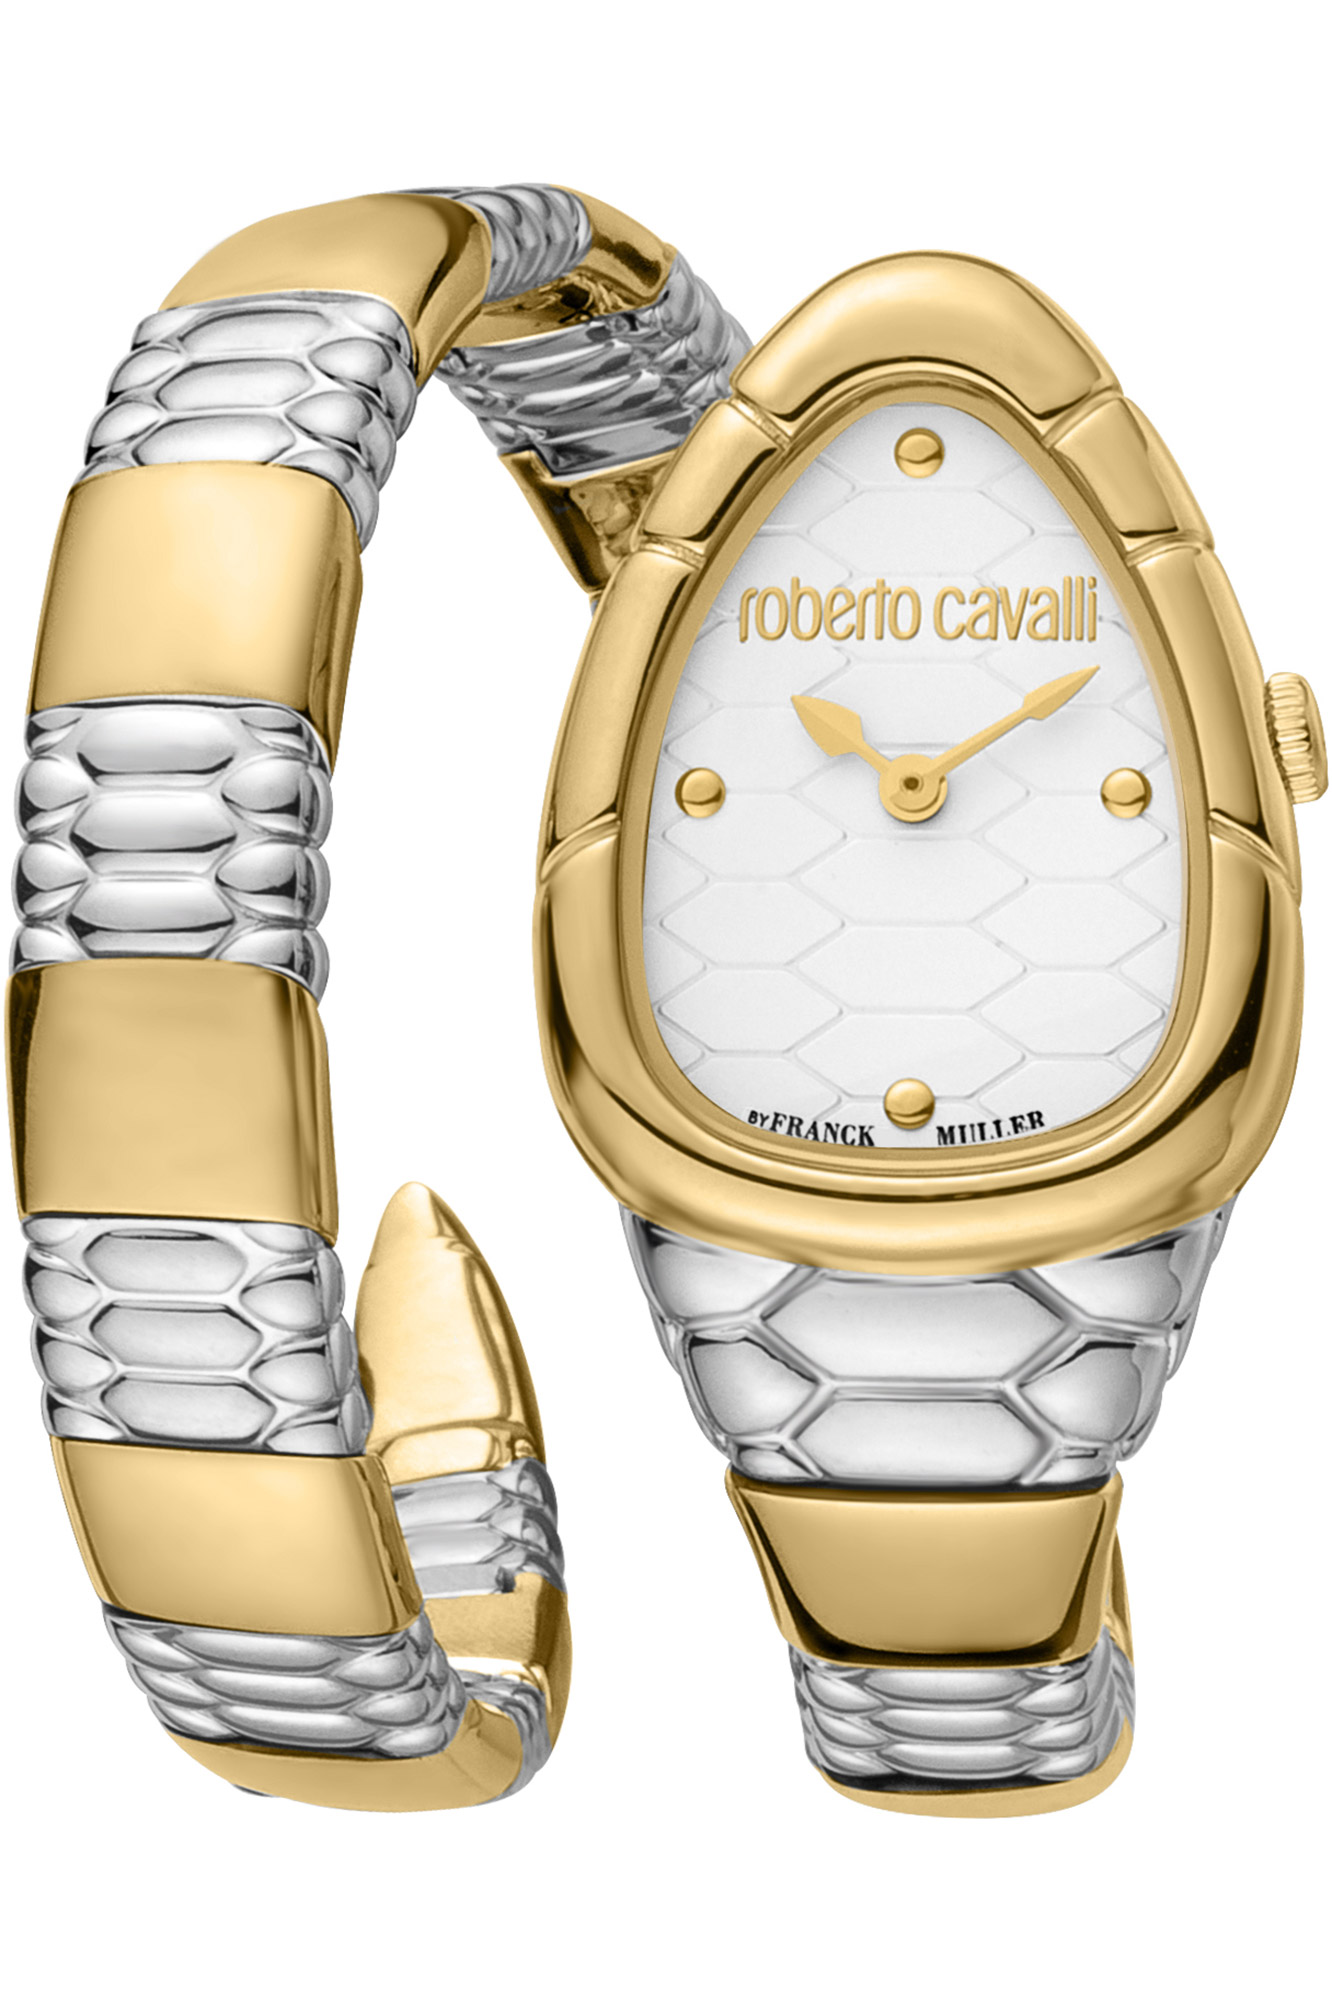 Reloj Roberto Cavalli by Franck Muller rv1l184m0061